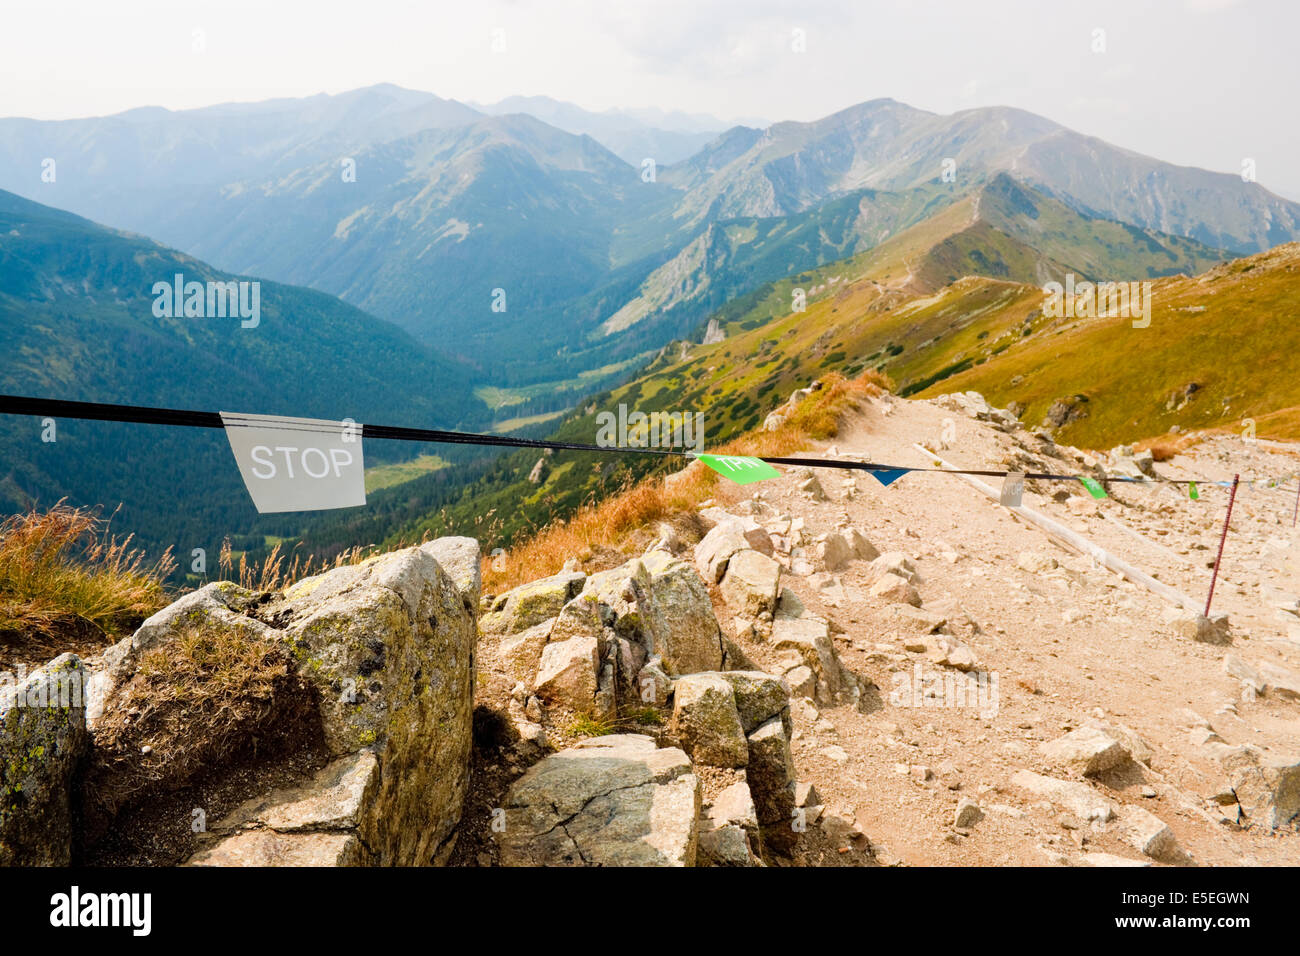 Segno di stop in Tatra national park Foto Stock